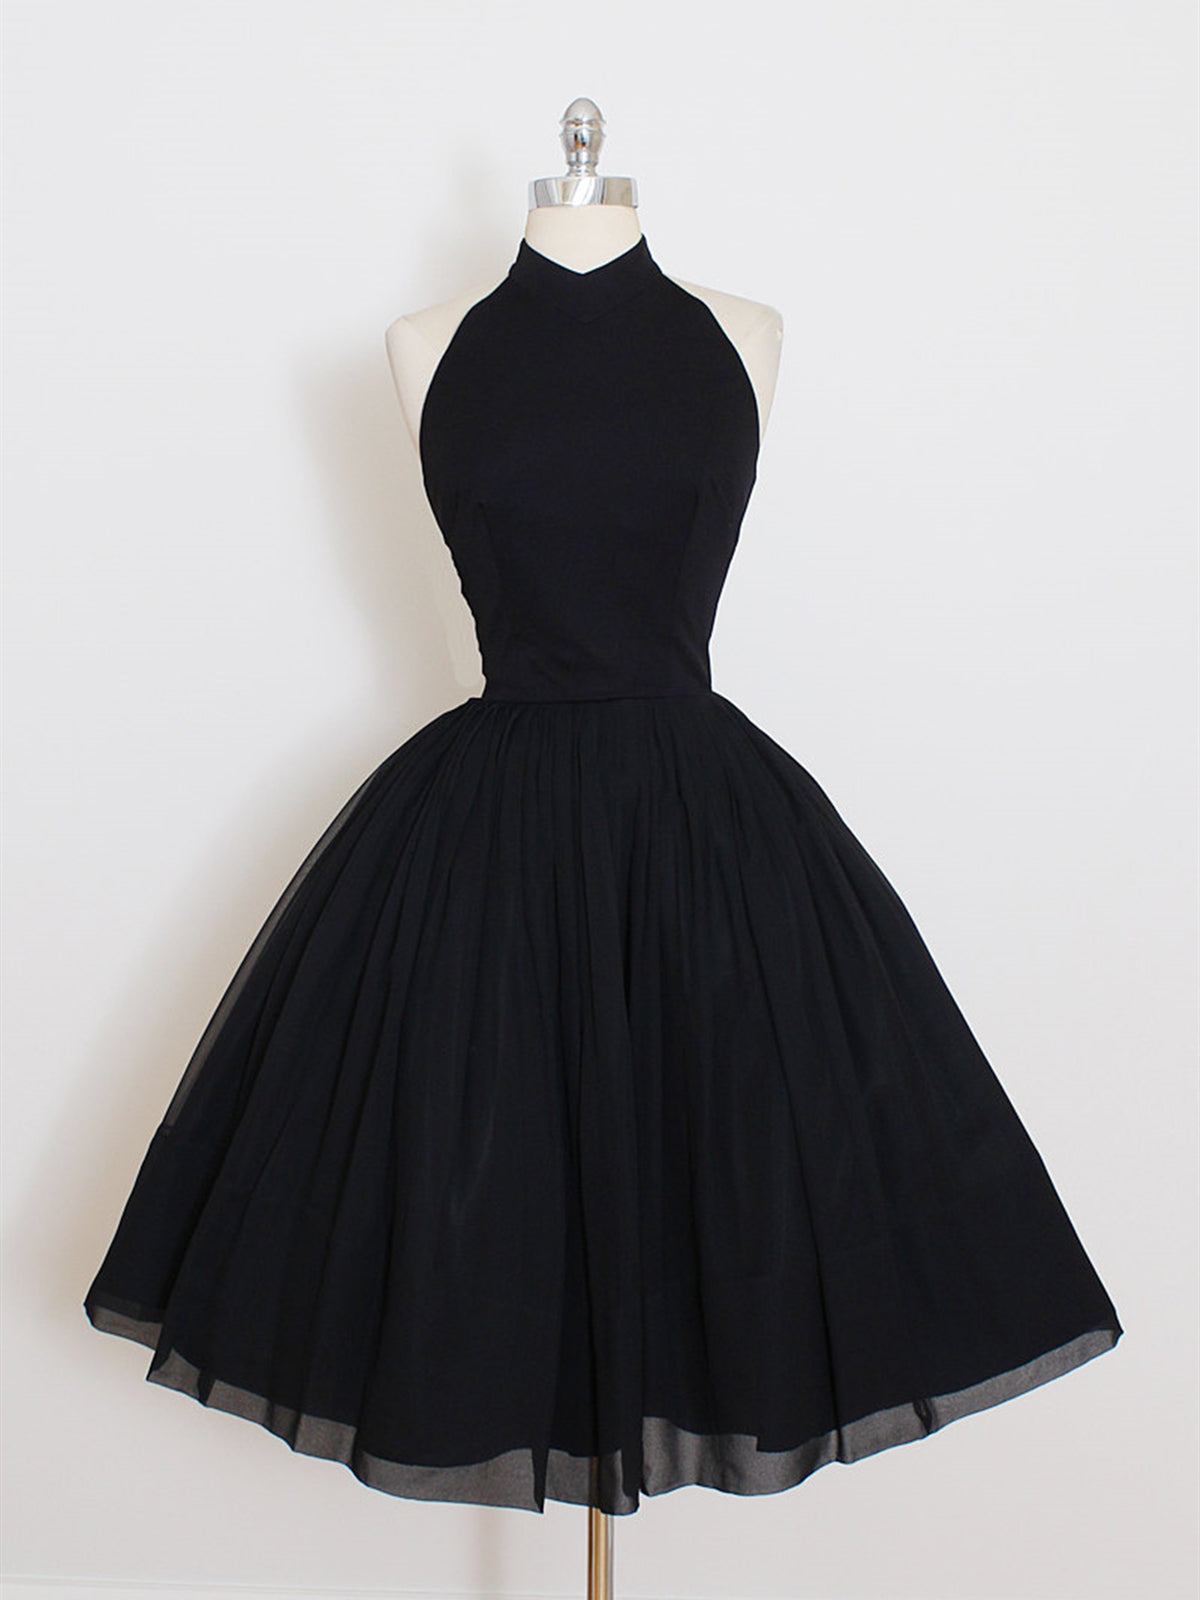 Functional Dress, Halter Neck Short Black Backless Prom Dresses, Open Back Short Black Formal Homecoming Dresses